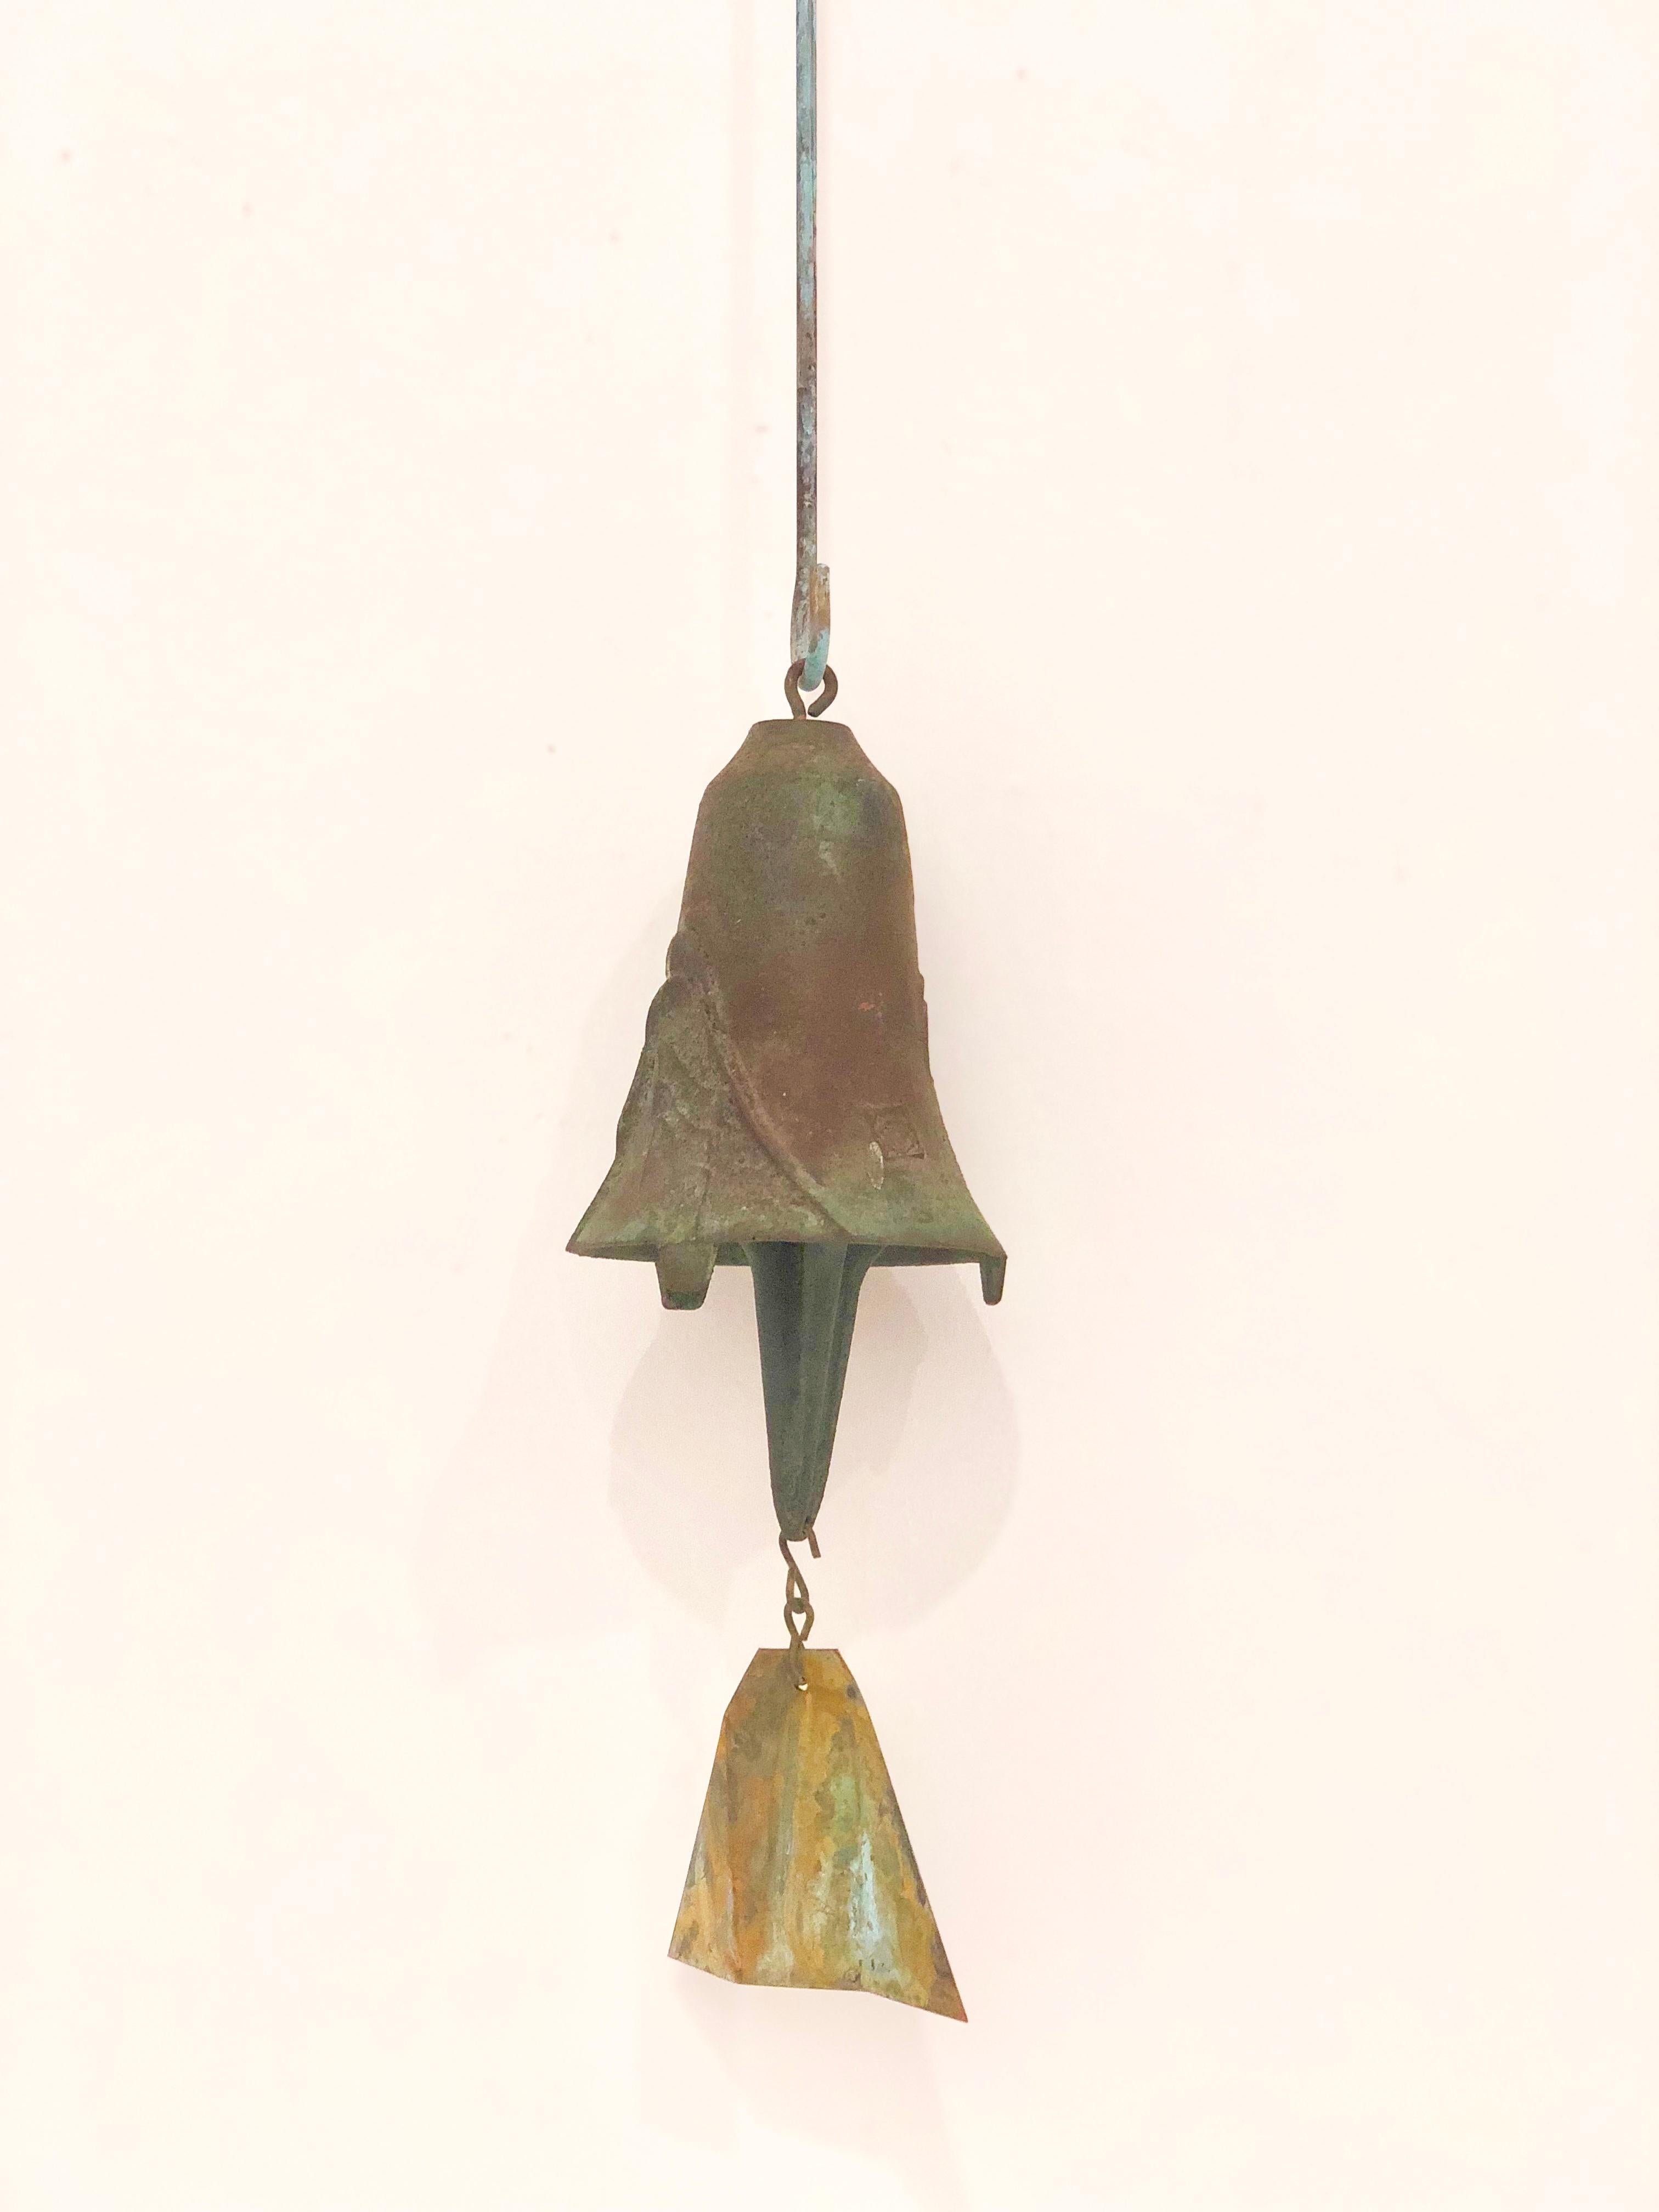 Bronze bell by Paolo Soleri, circa 1970s, Brutalist design nice sound.